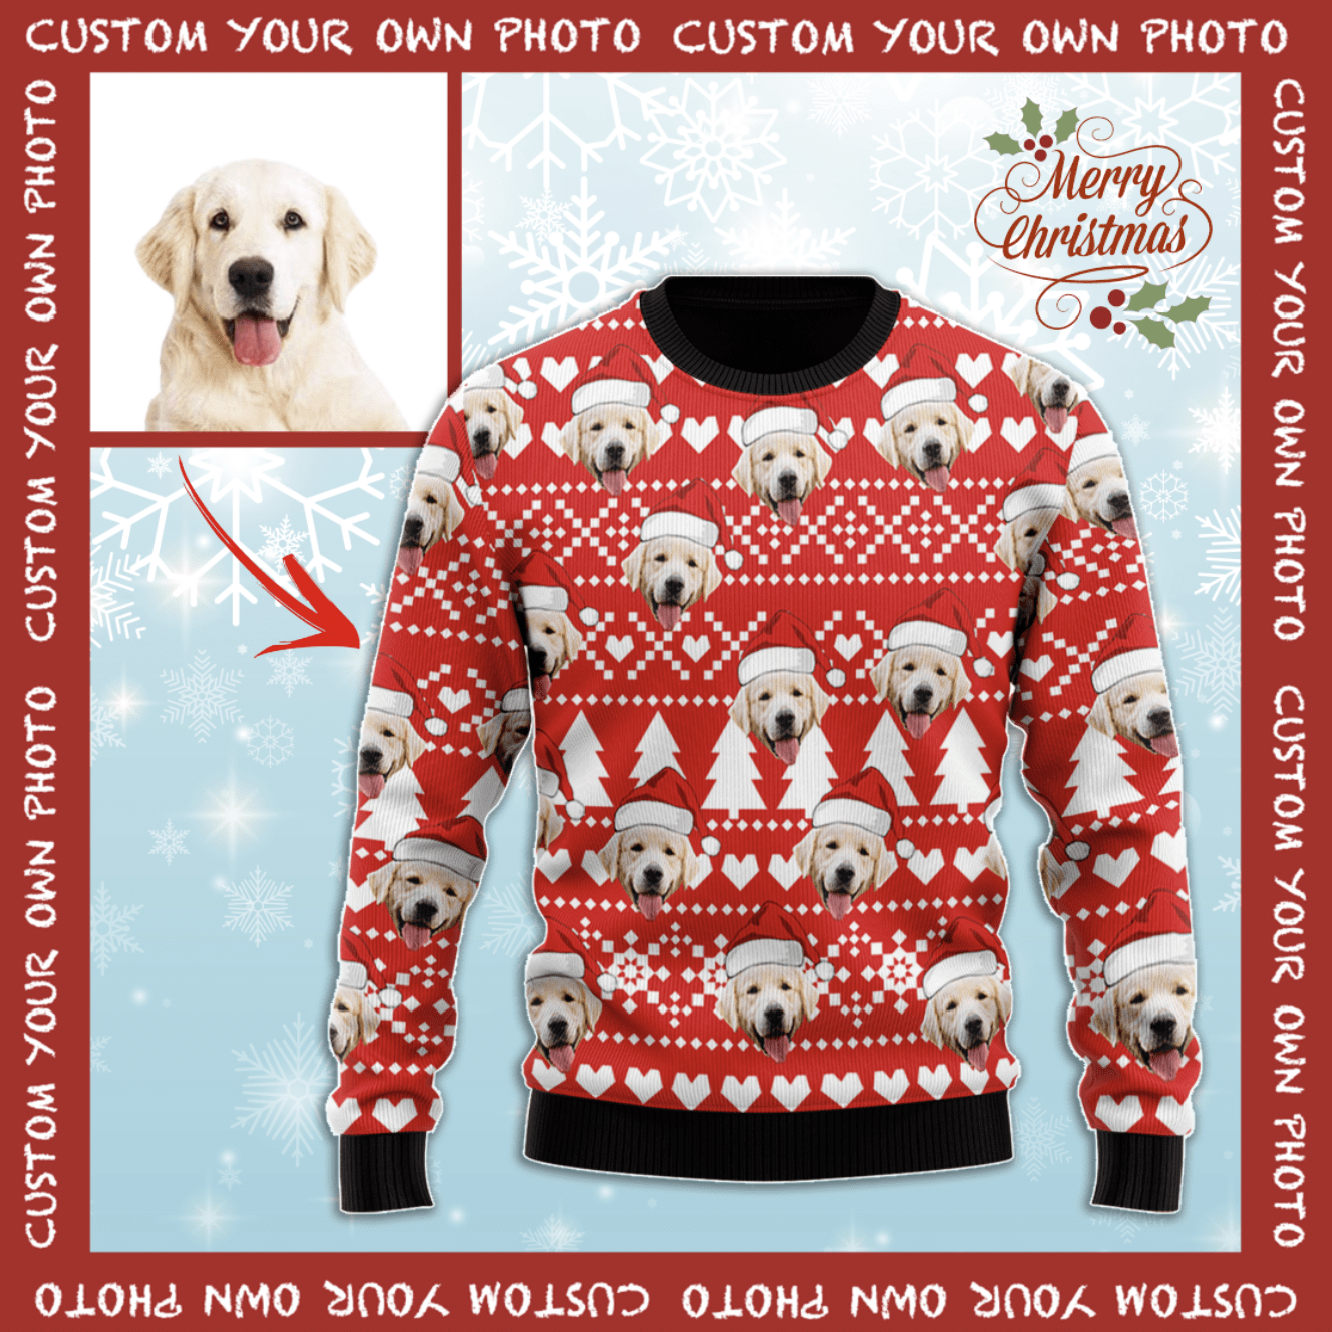 Personalized Christmas Funny Custom Photo Unisex Sweater PAN